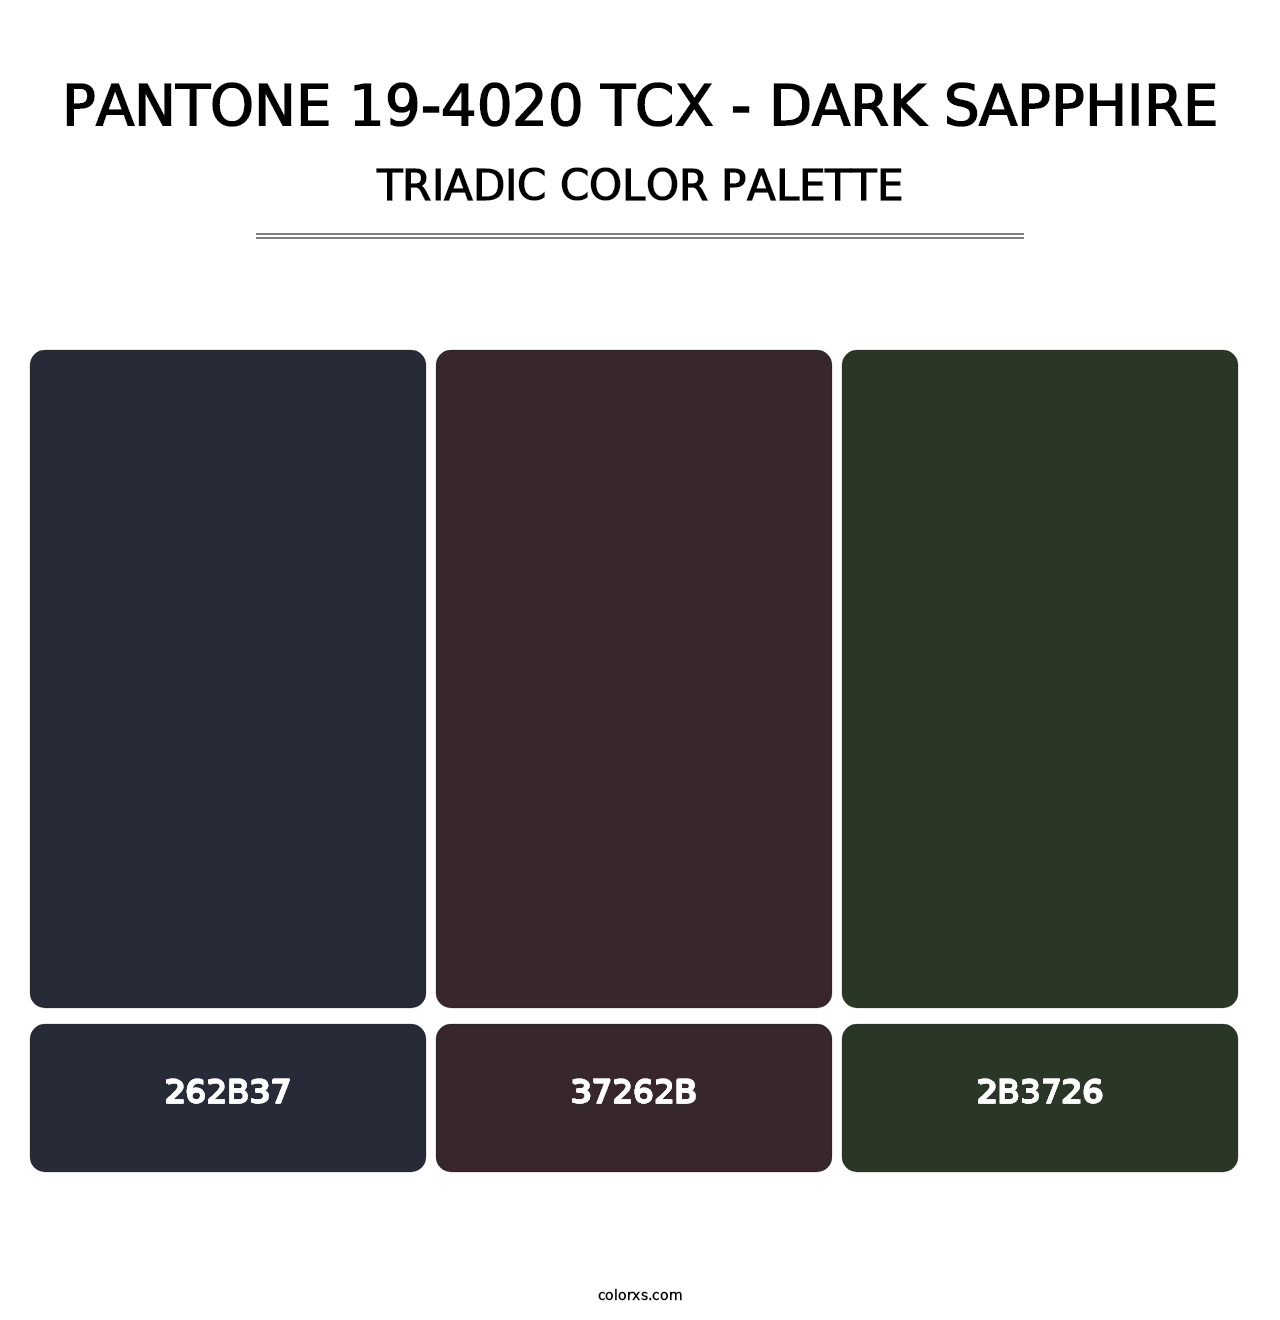 PANTONE 19-4020 TCX - Dark Sapphire - Triadic Color Palette